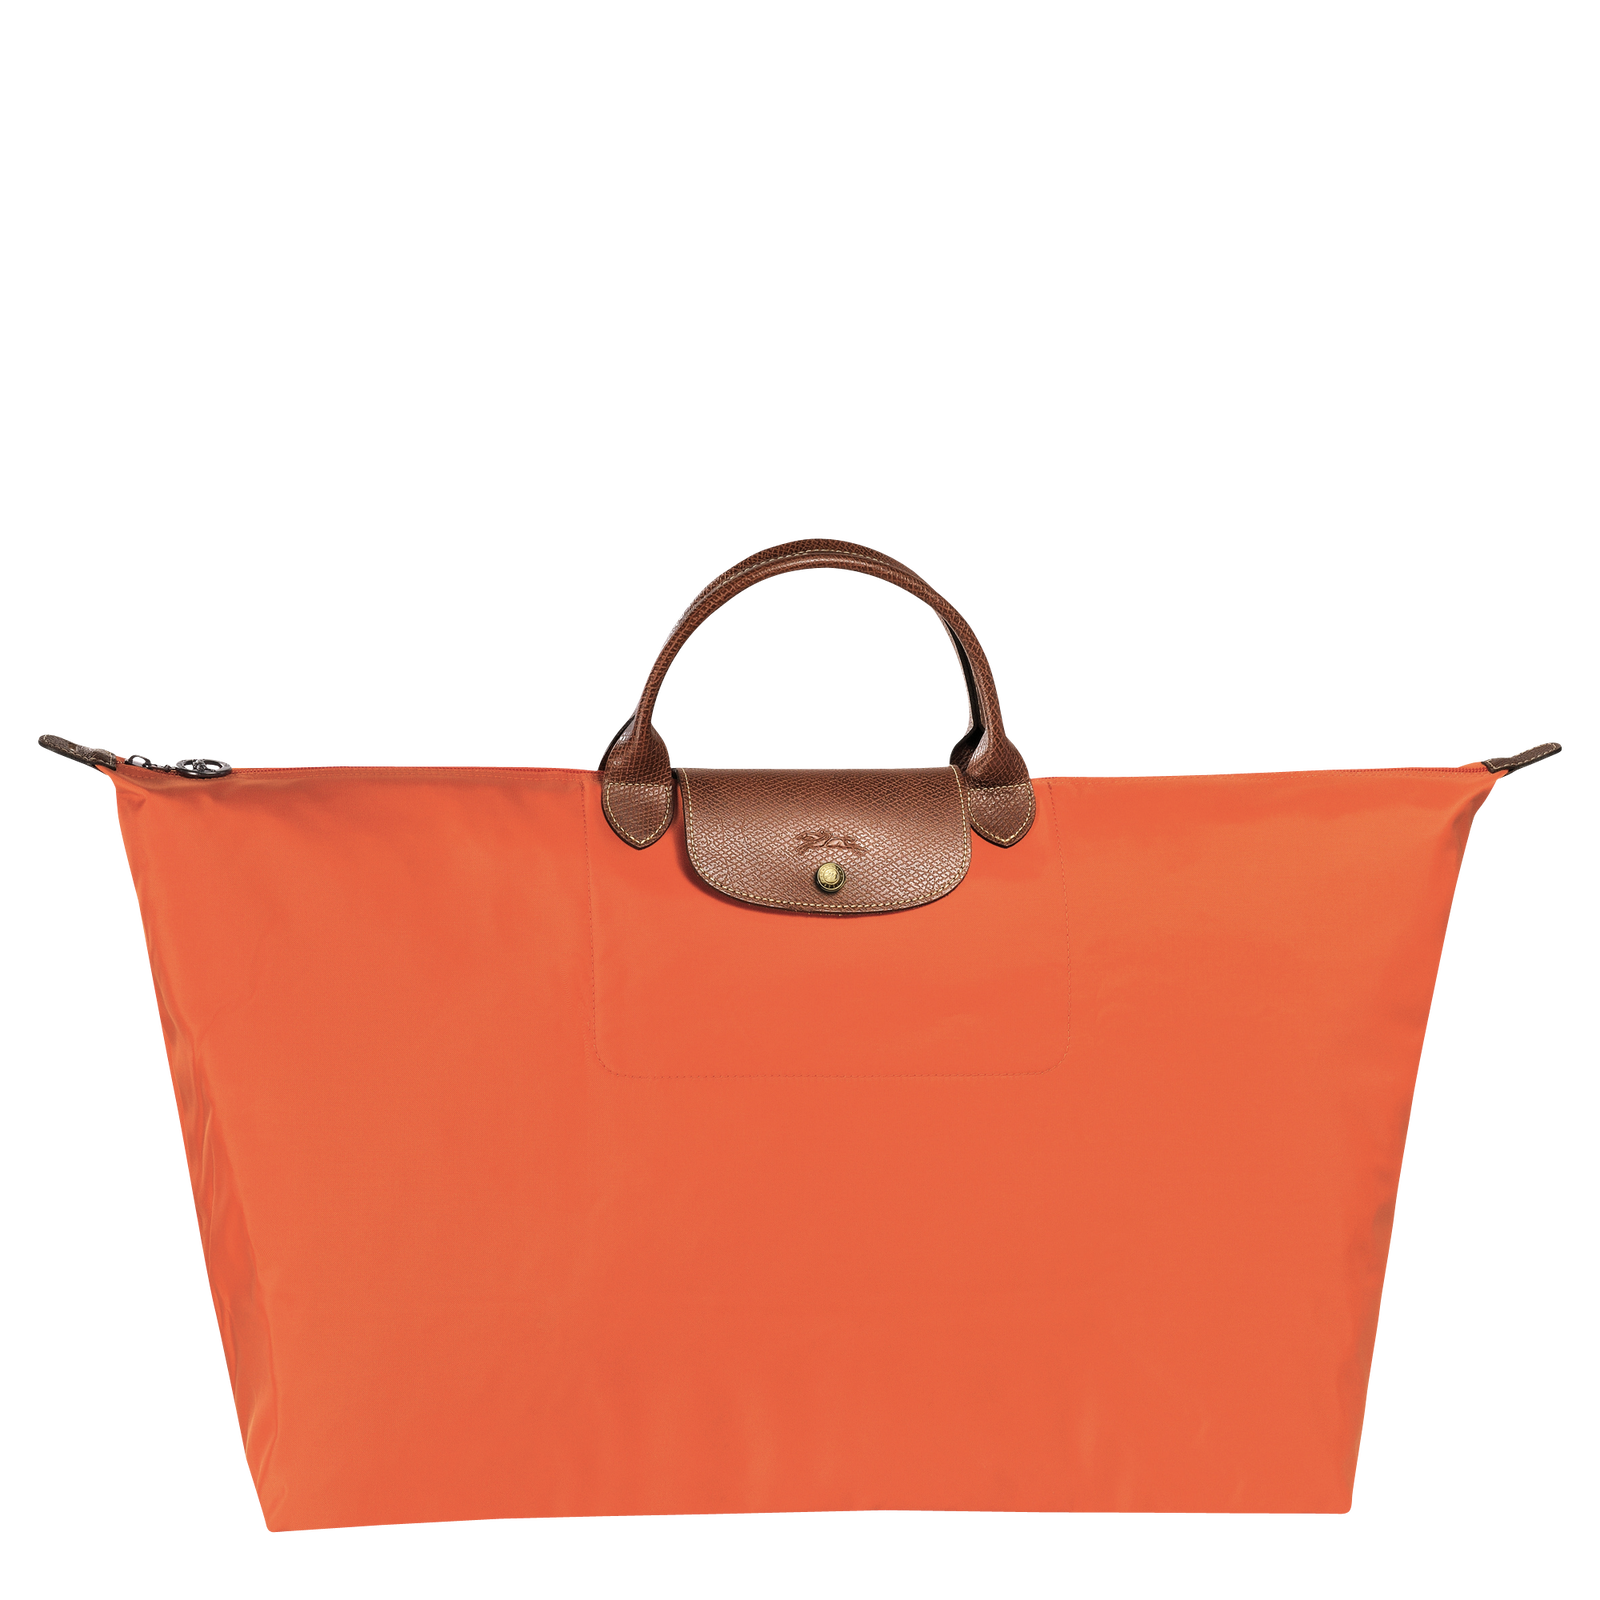 Le Pliage Original 旅行袋 M, 橙色